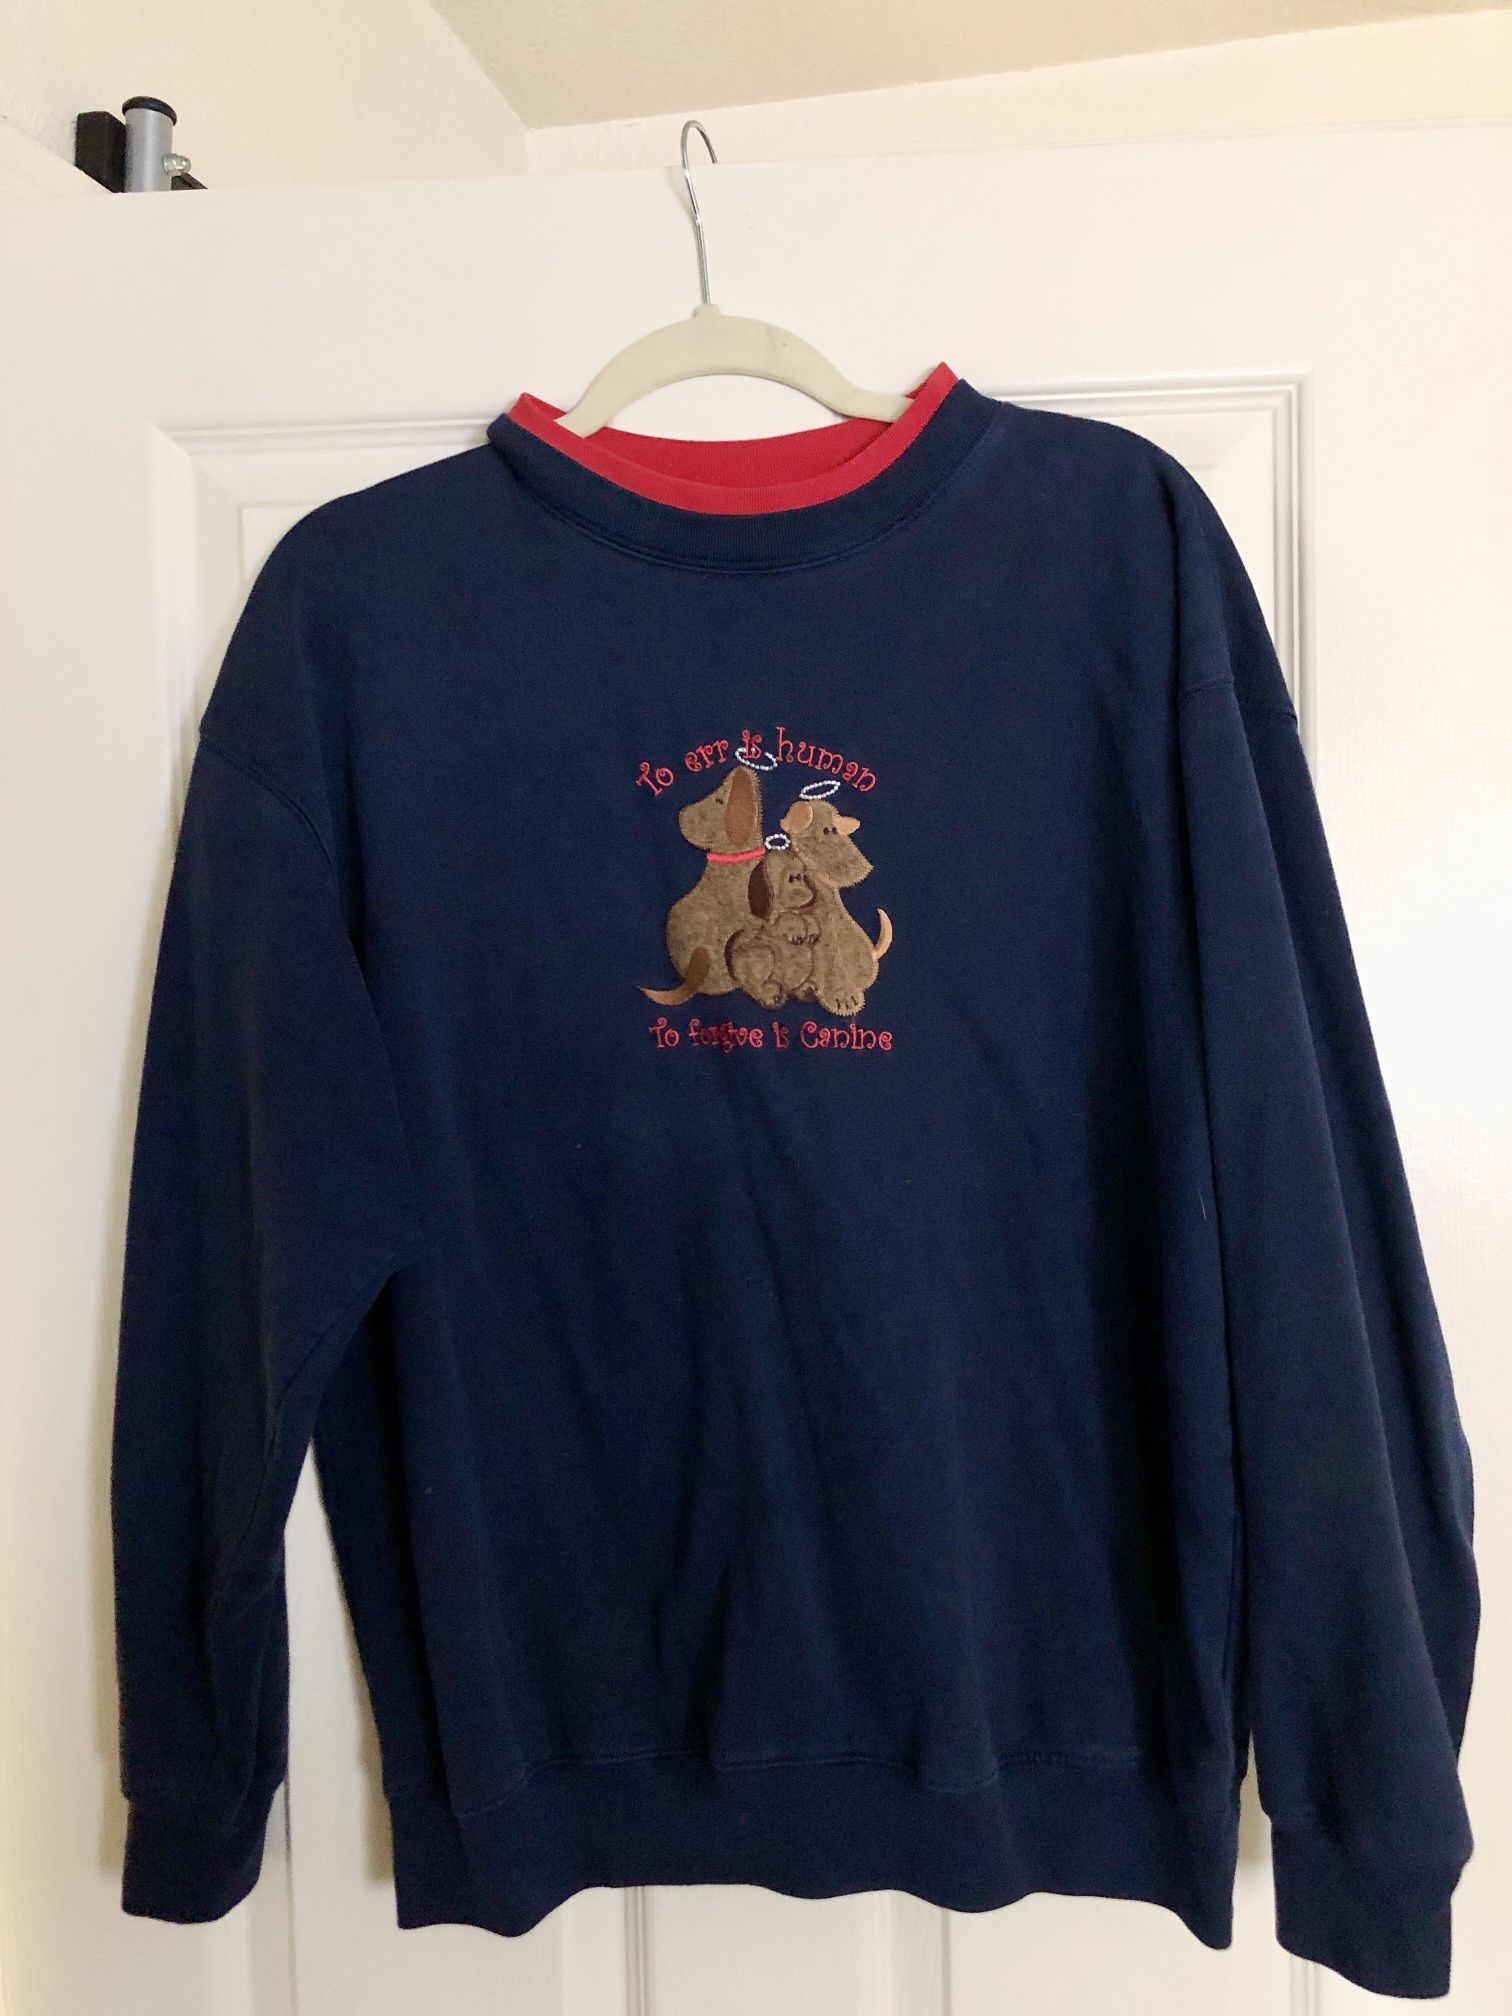 Vintage Embroidered Crewneck Sweater Sweatshirt